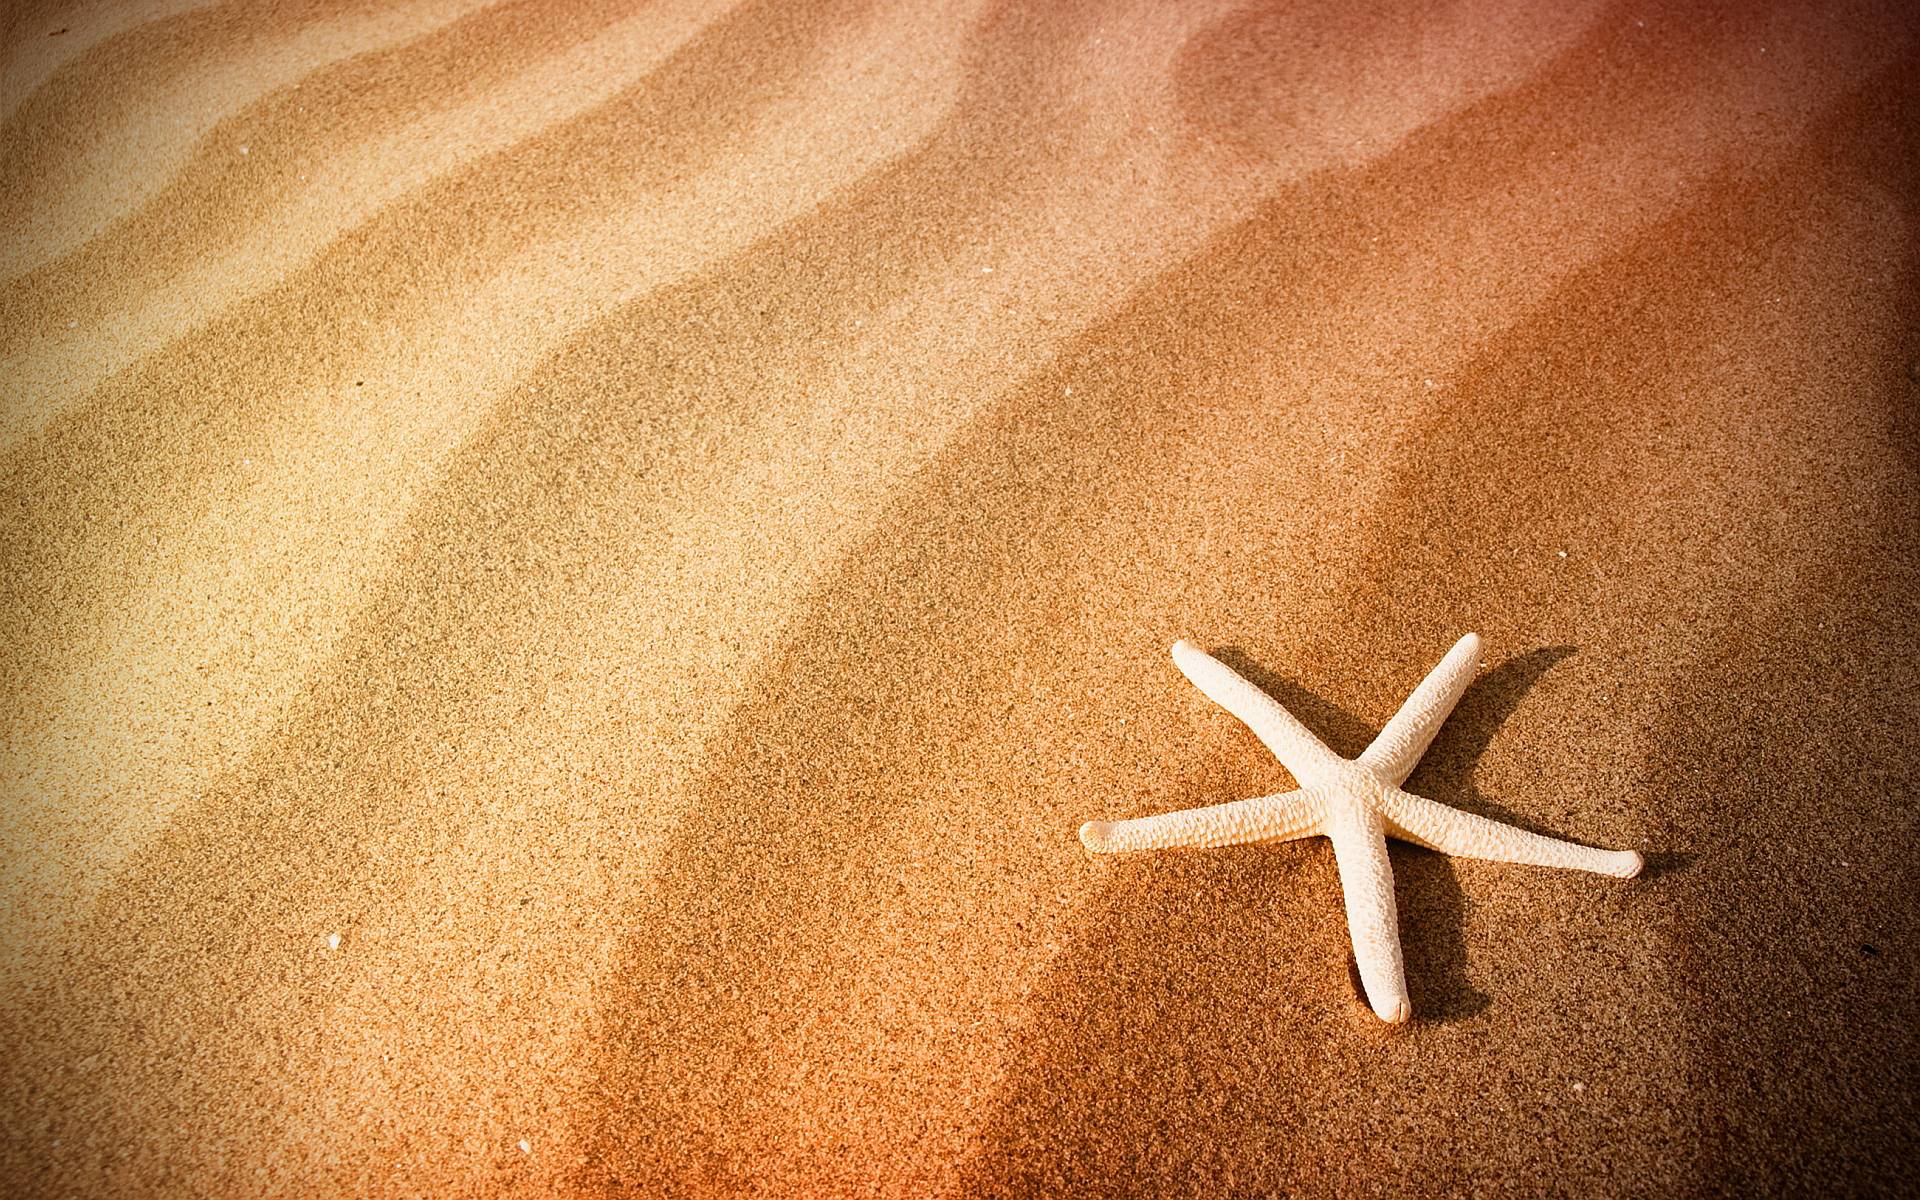 Sand Texture Wallpaper  iPhone Android  Desktop Backgrounds  Sand  textures Sand Texture background hd